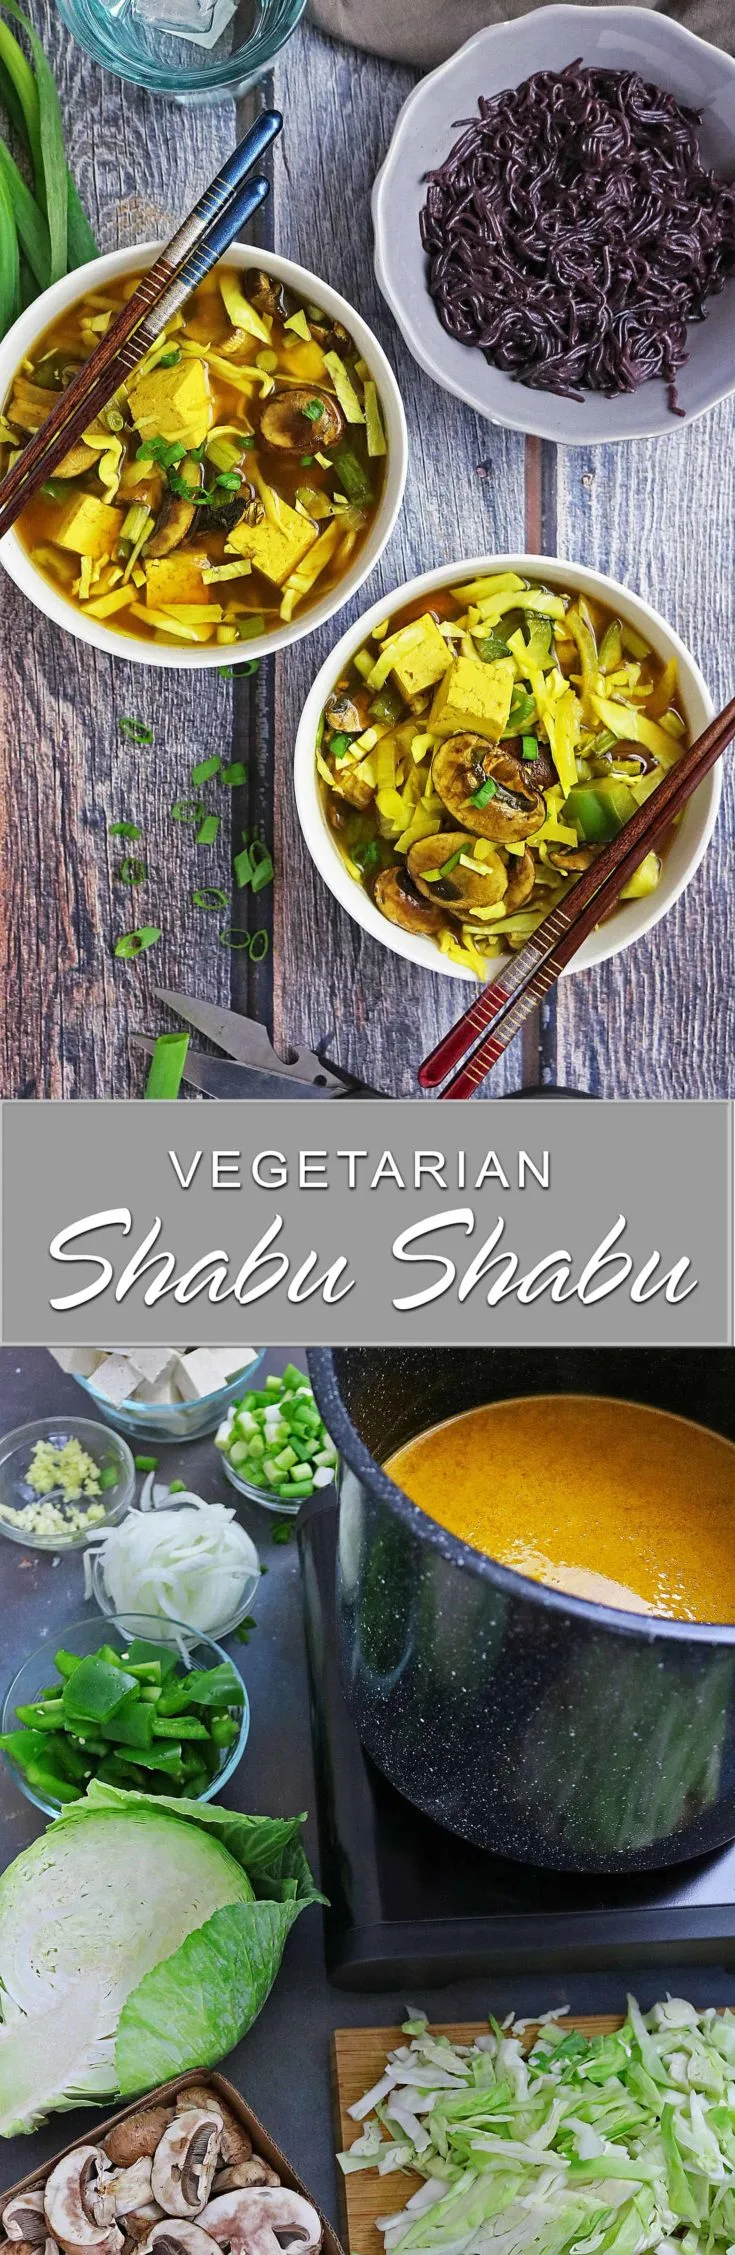 Shabu Shabu Recipe - Chichilicious